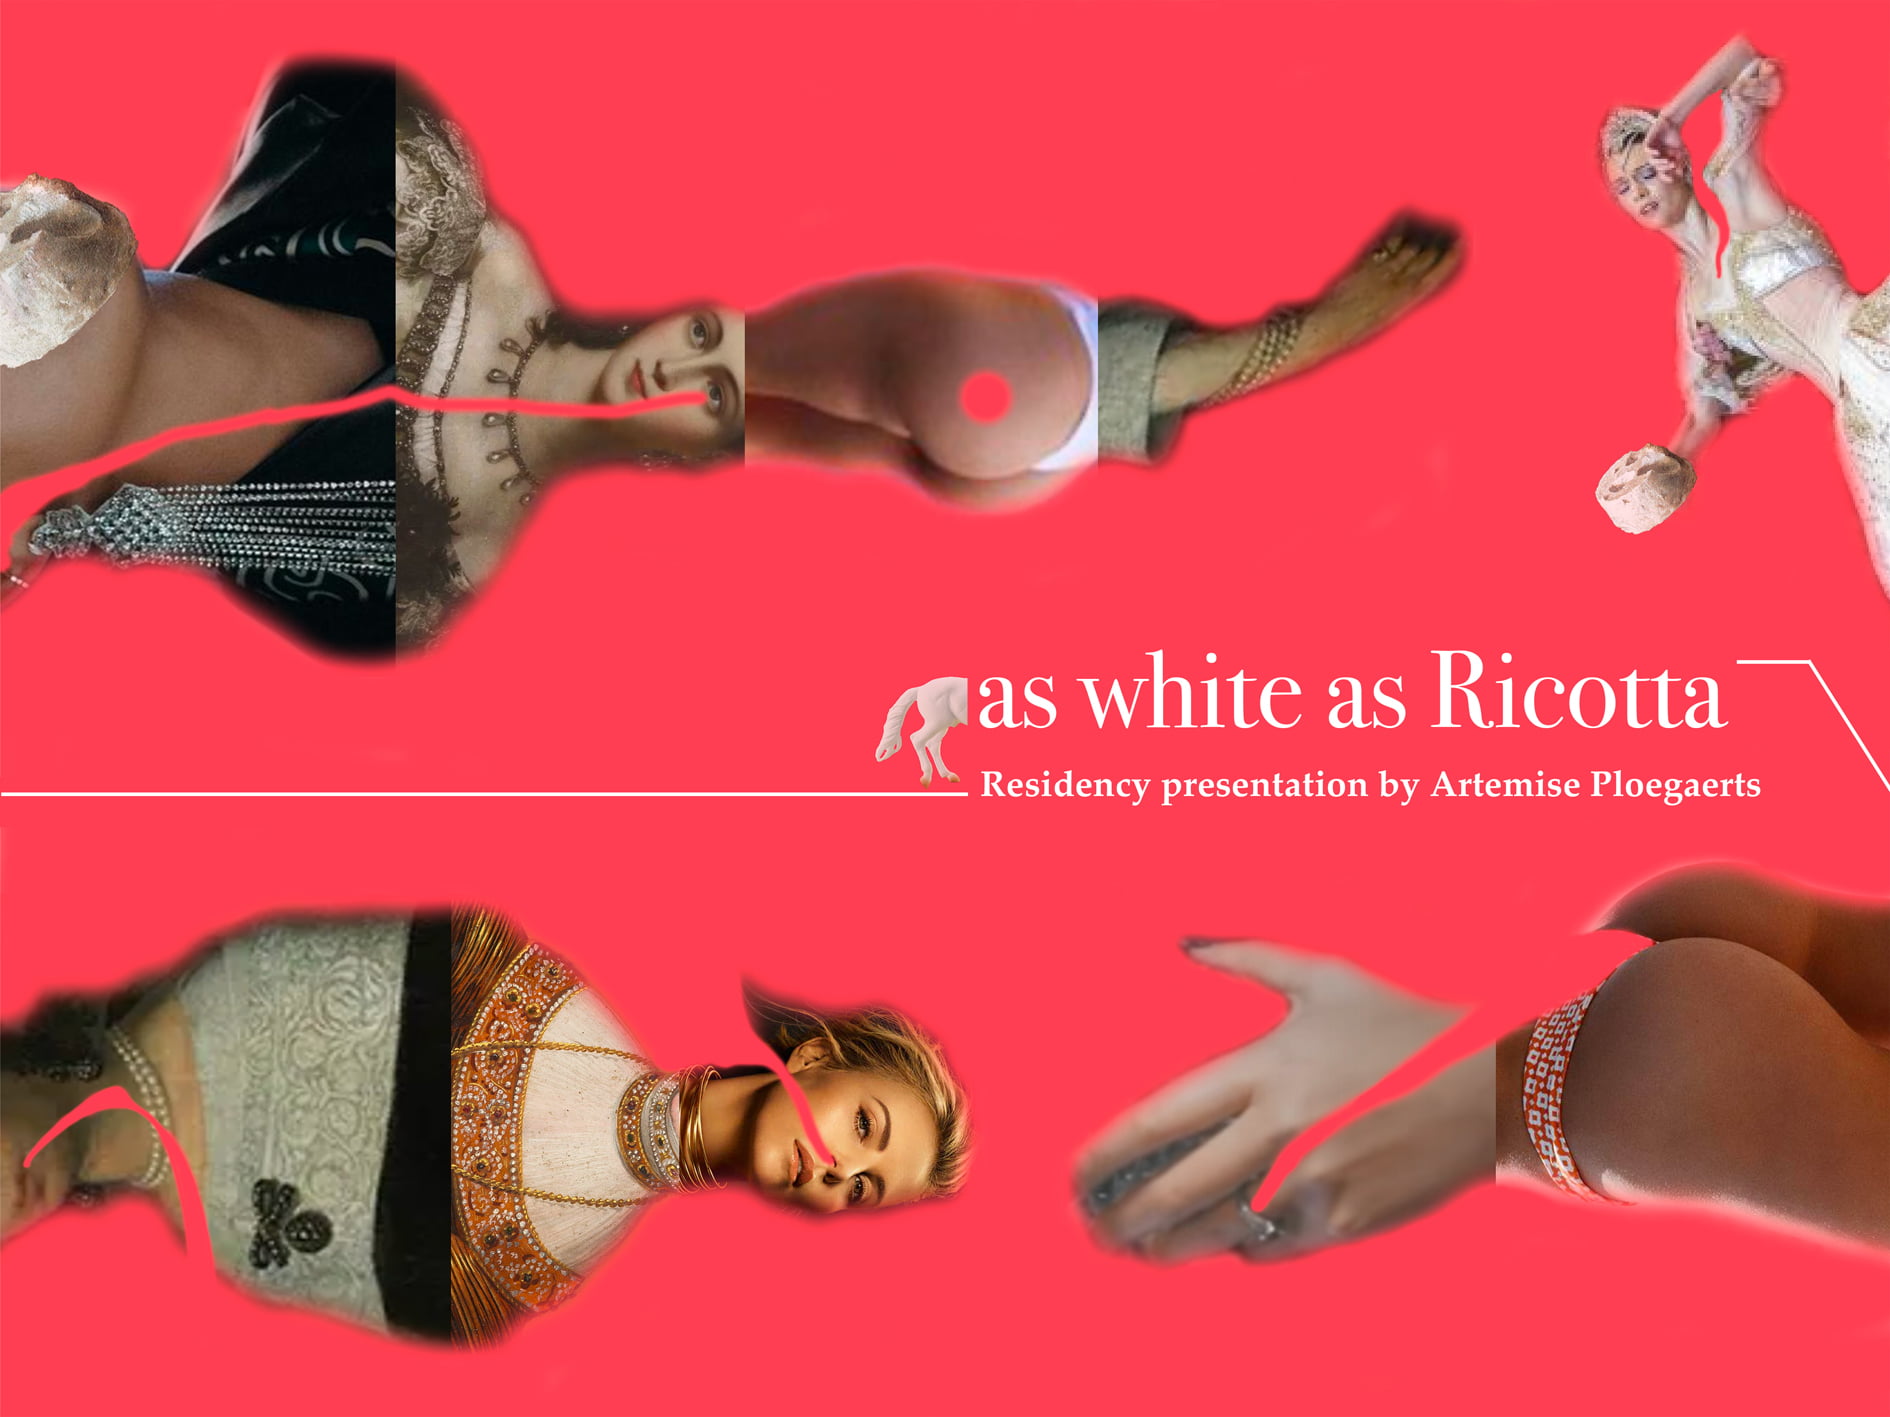 As white as Ricotta (titolo provvisorio) / prova aperta di Artémise Ploegaerts